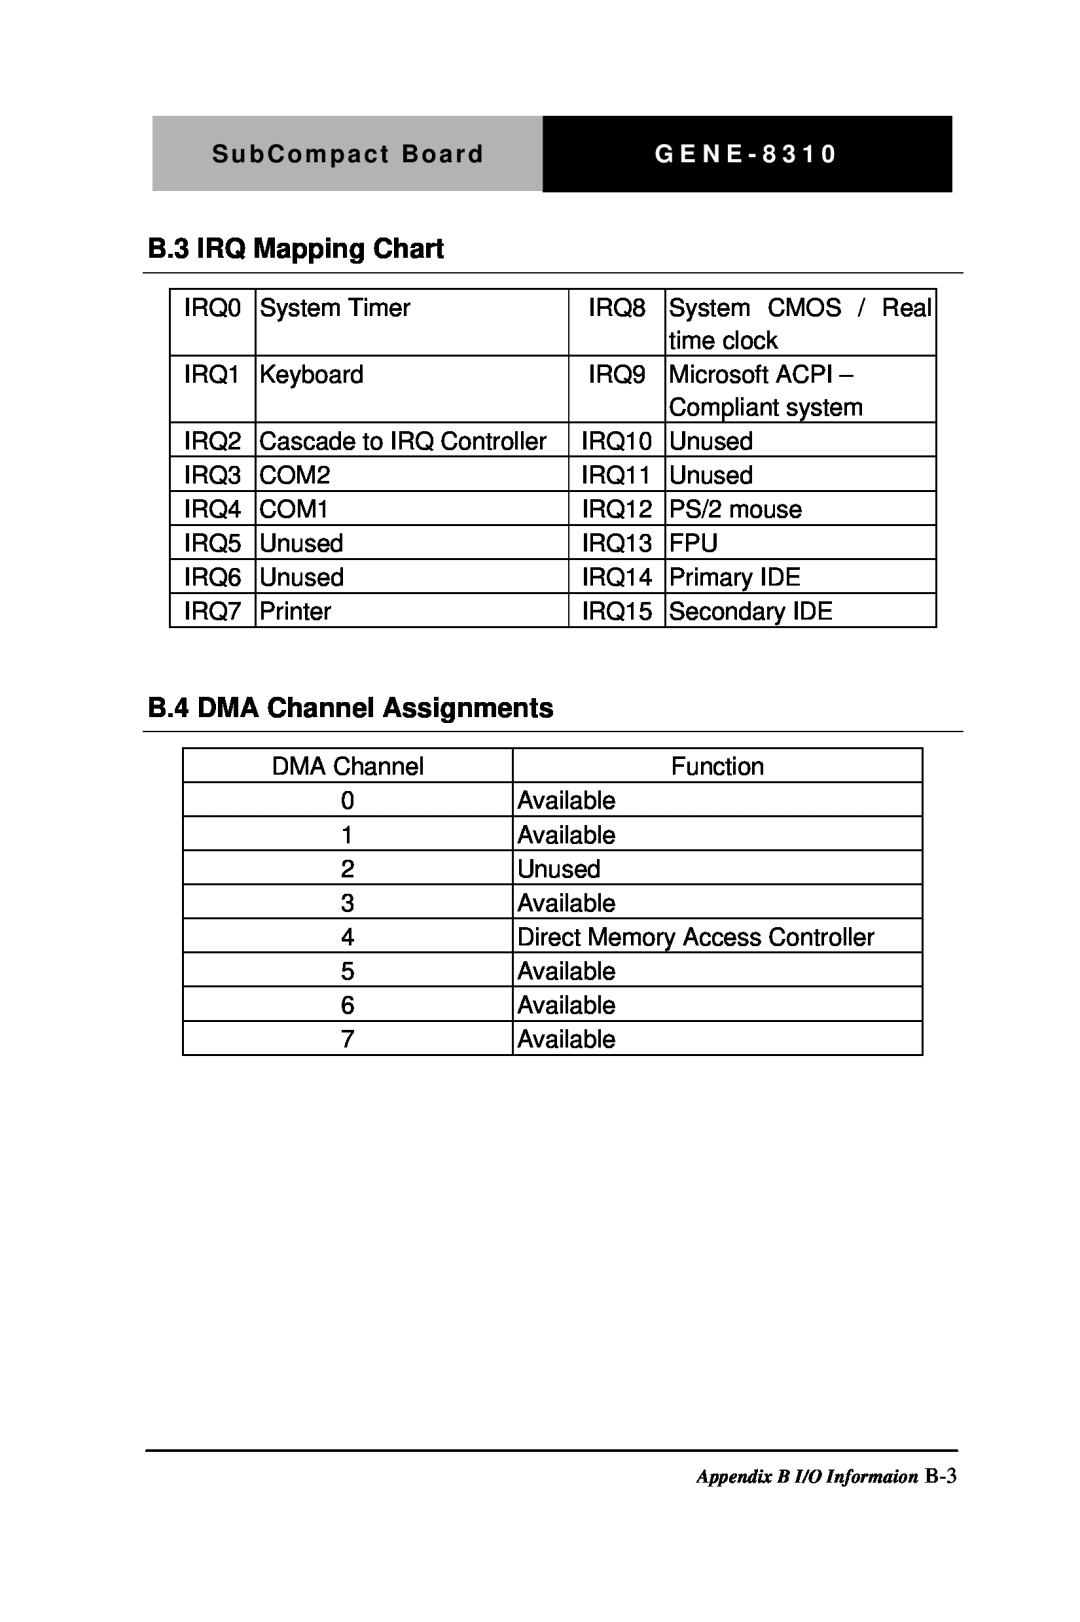 Intel GENE-8310 manual B.3 IRQ Mapping Chart, B.4 DMA Channel Assignments, SubCompact BoardG E N E - 8 3 1 